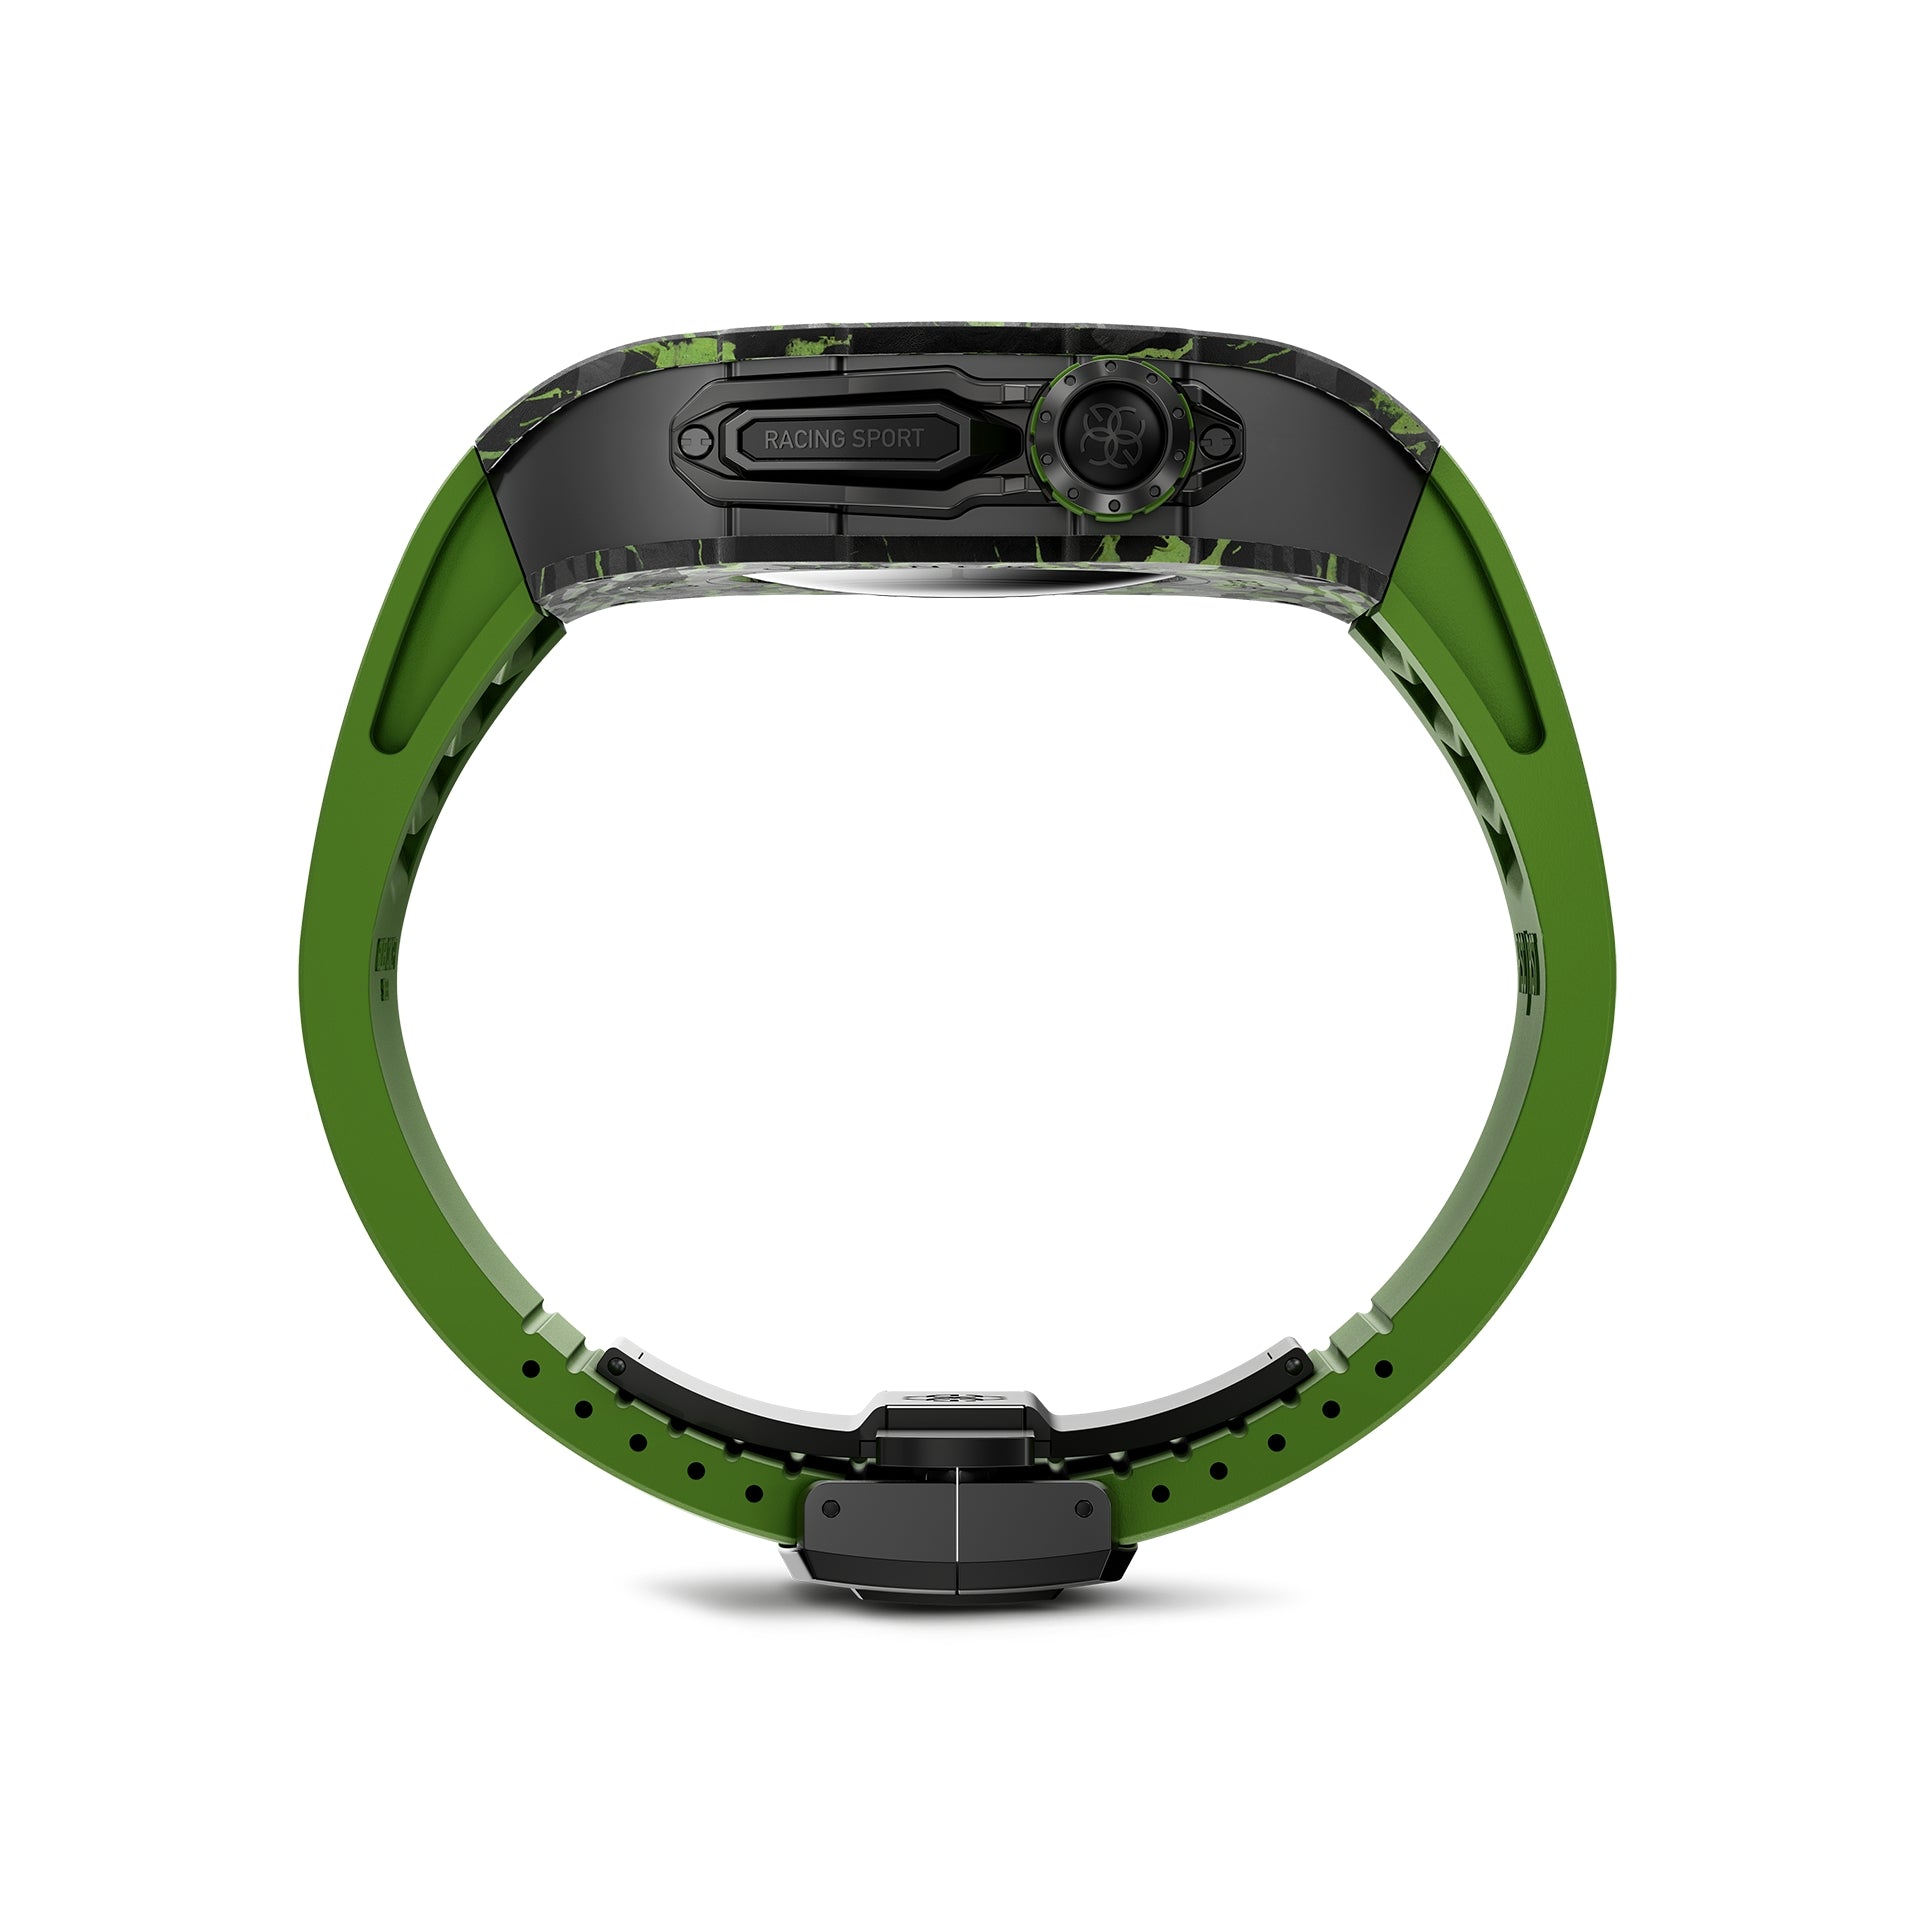 Apple Watch Case / RSCII - Hunter Green